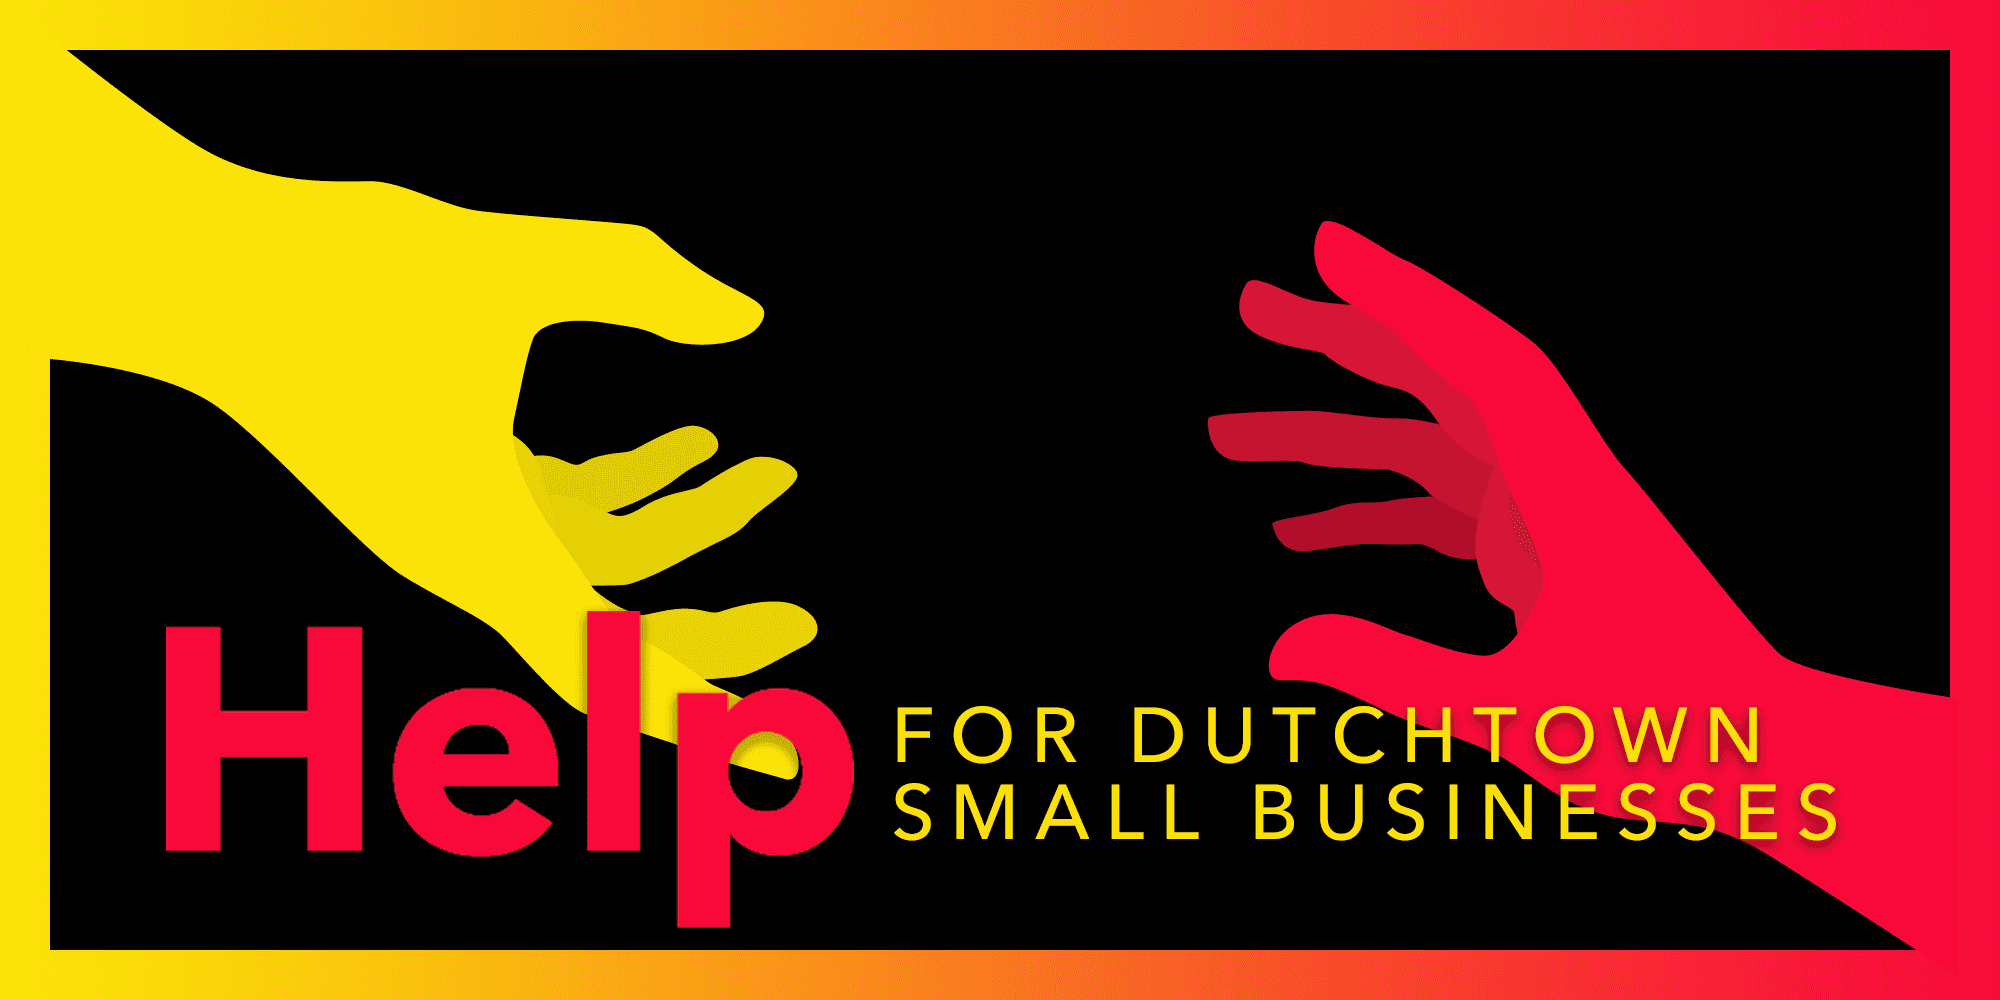 Dutchtown အသေးစားစီးပွားရေးလုပ်ငန်းများအတွက်အကူအညီ